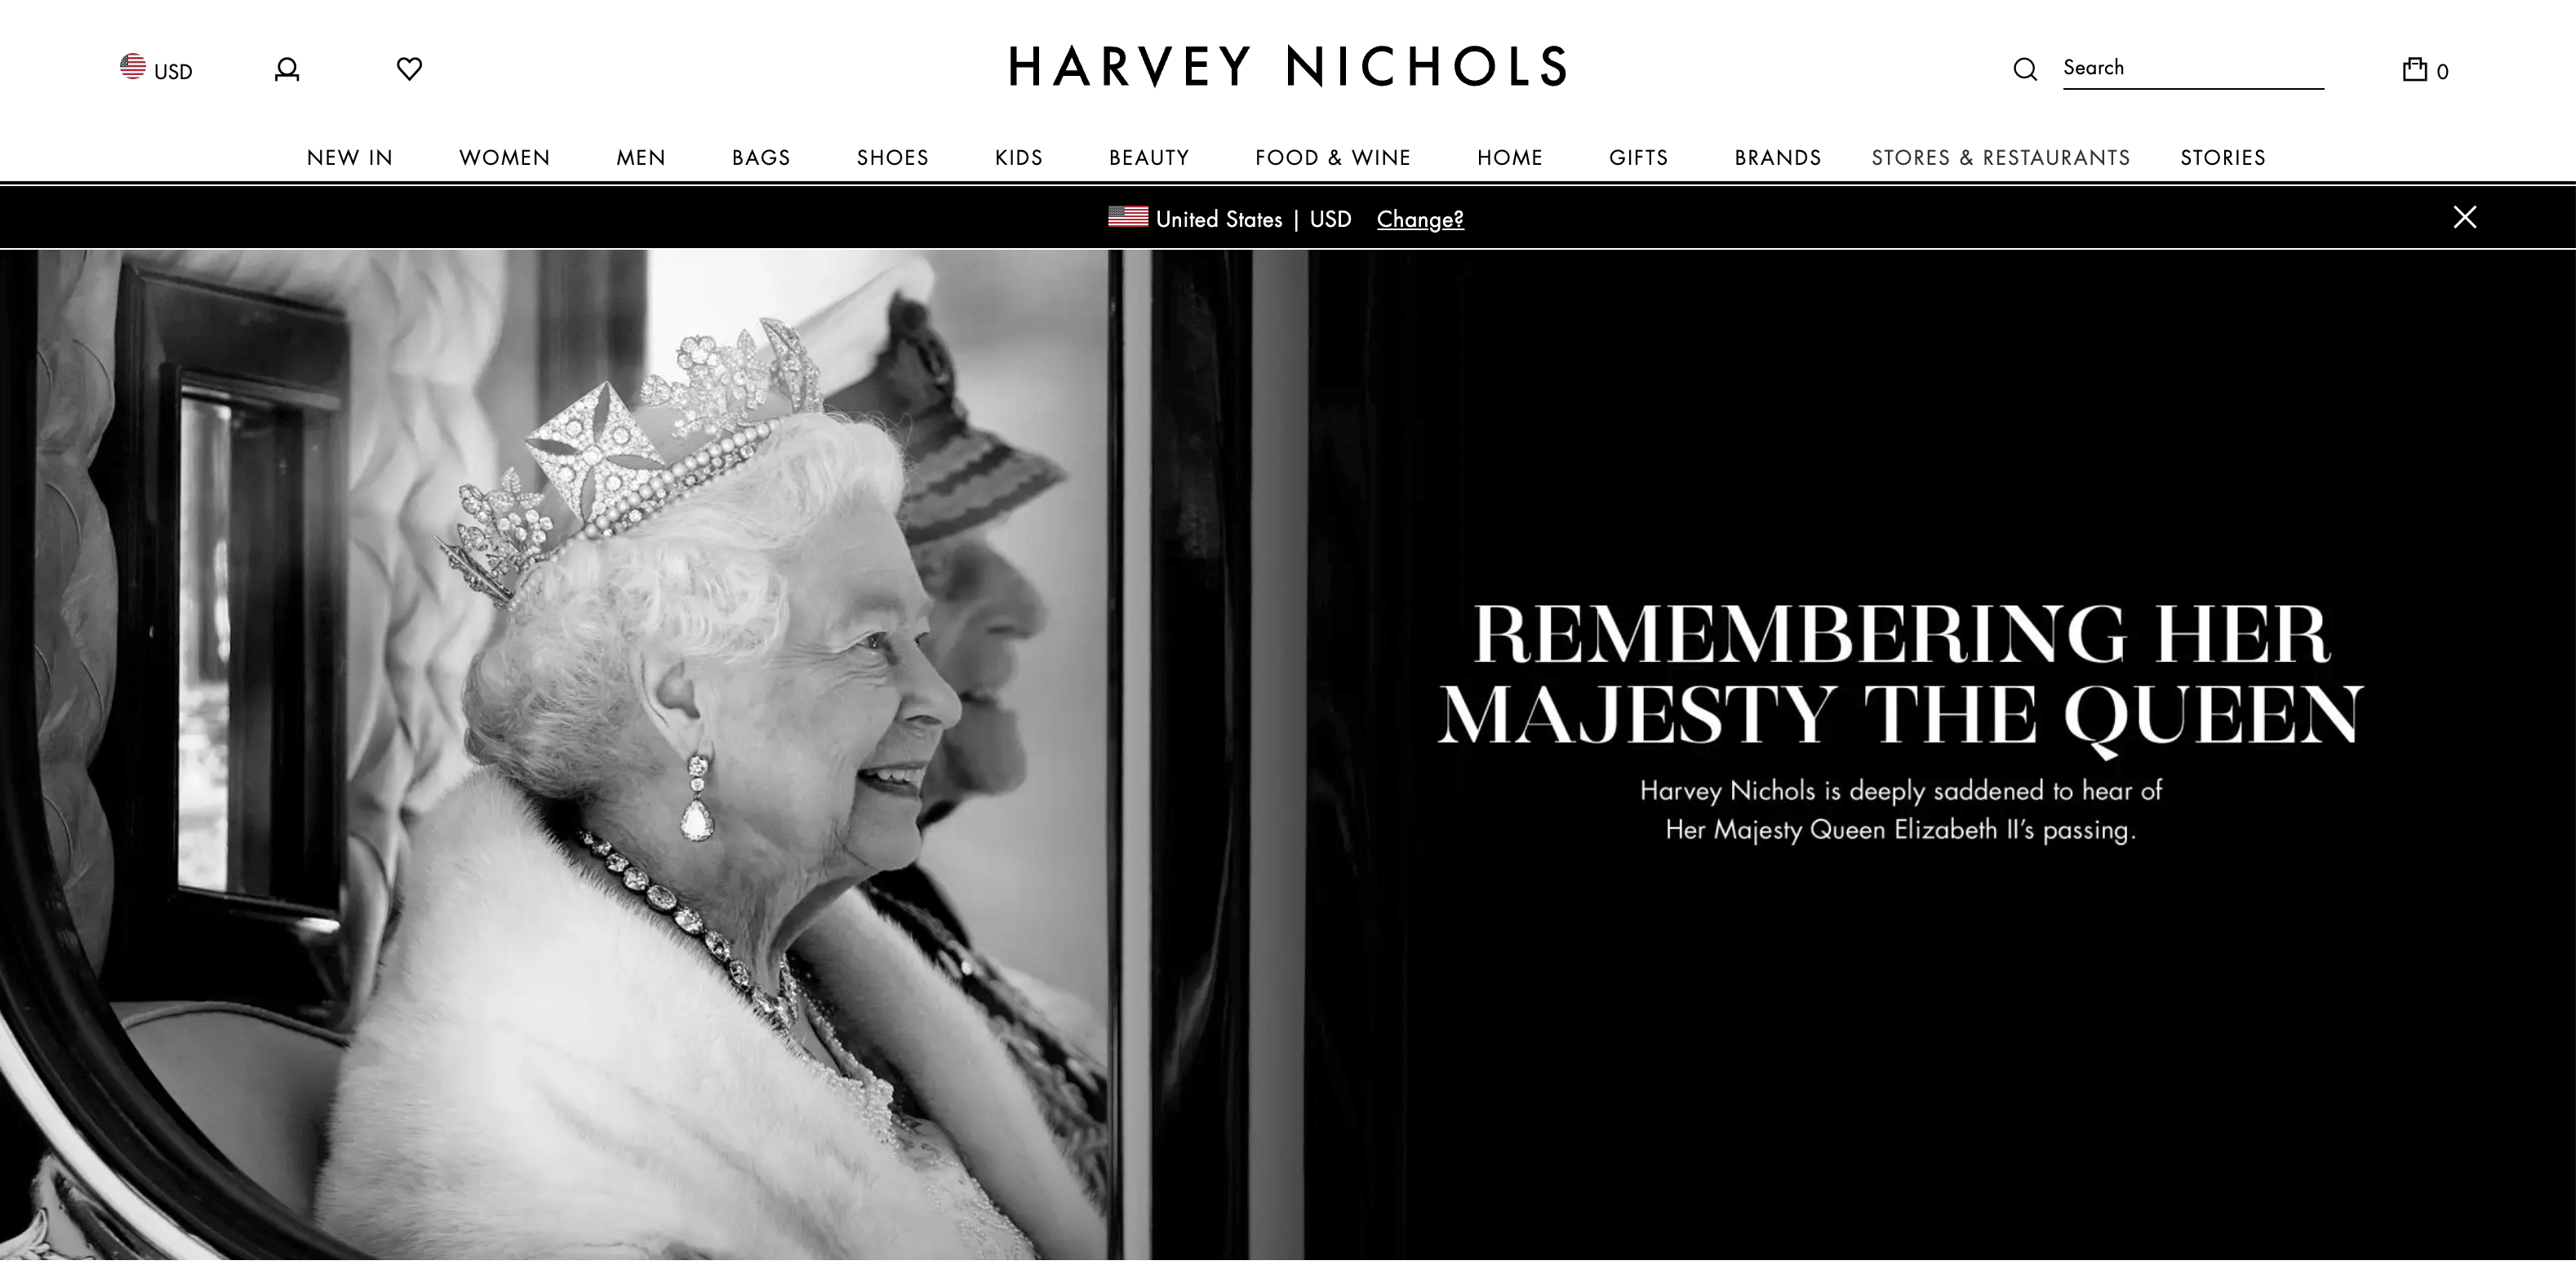 Harvey Nichols Queen Elizabeth